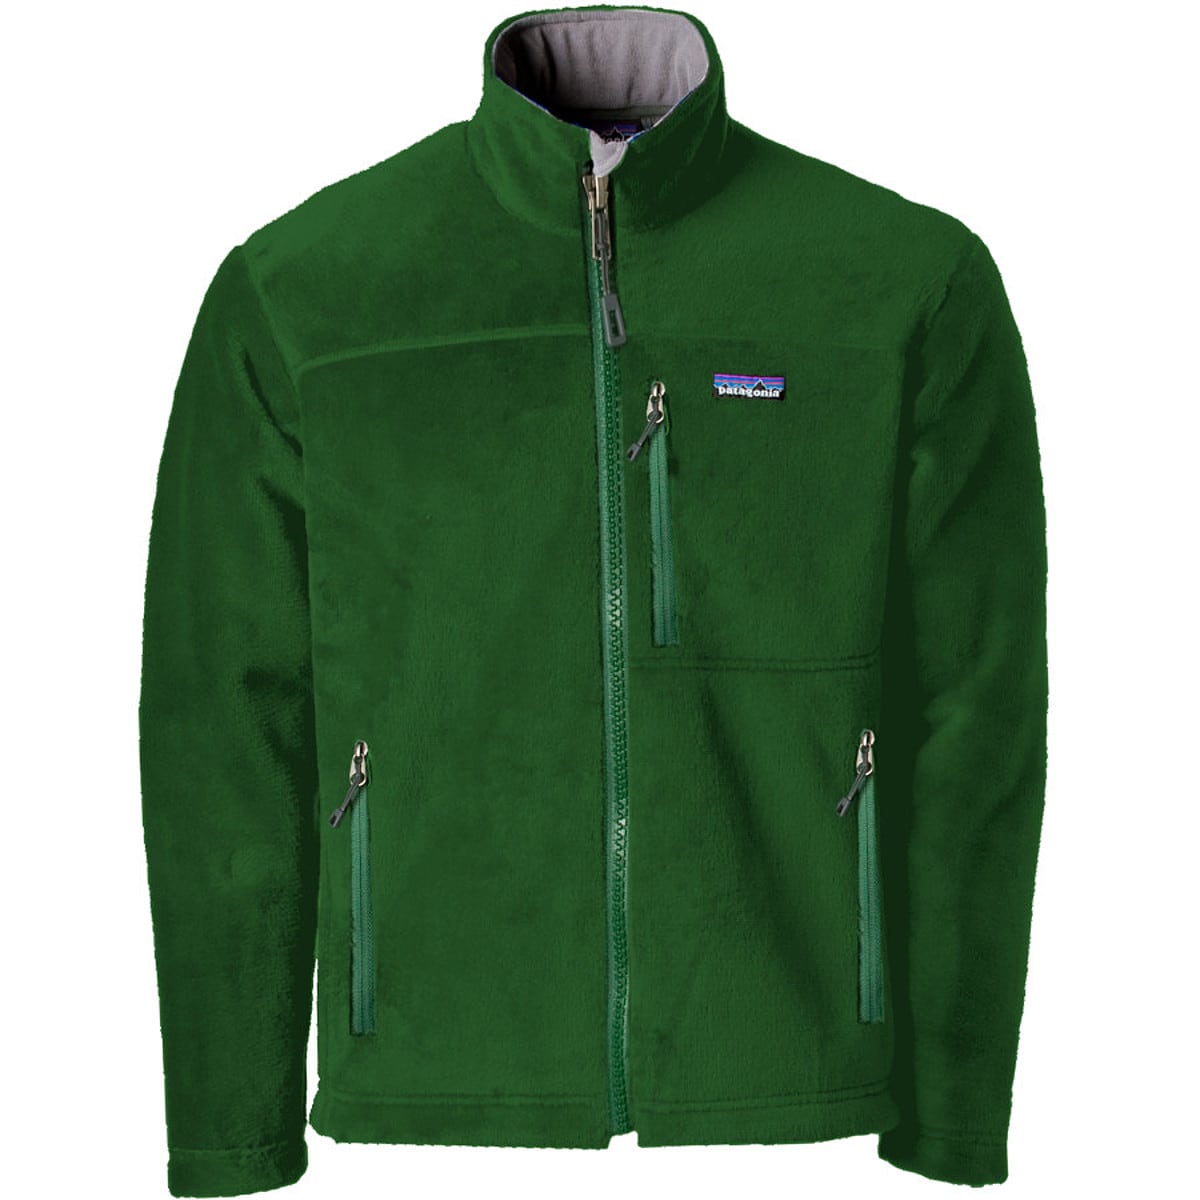 3610109 patagonia R4 jacket moss green L